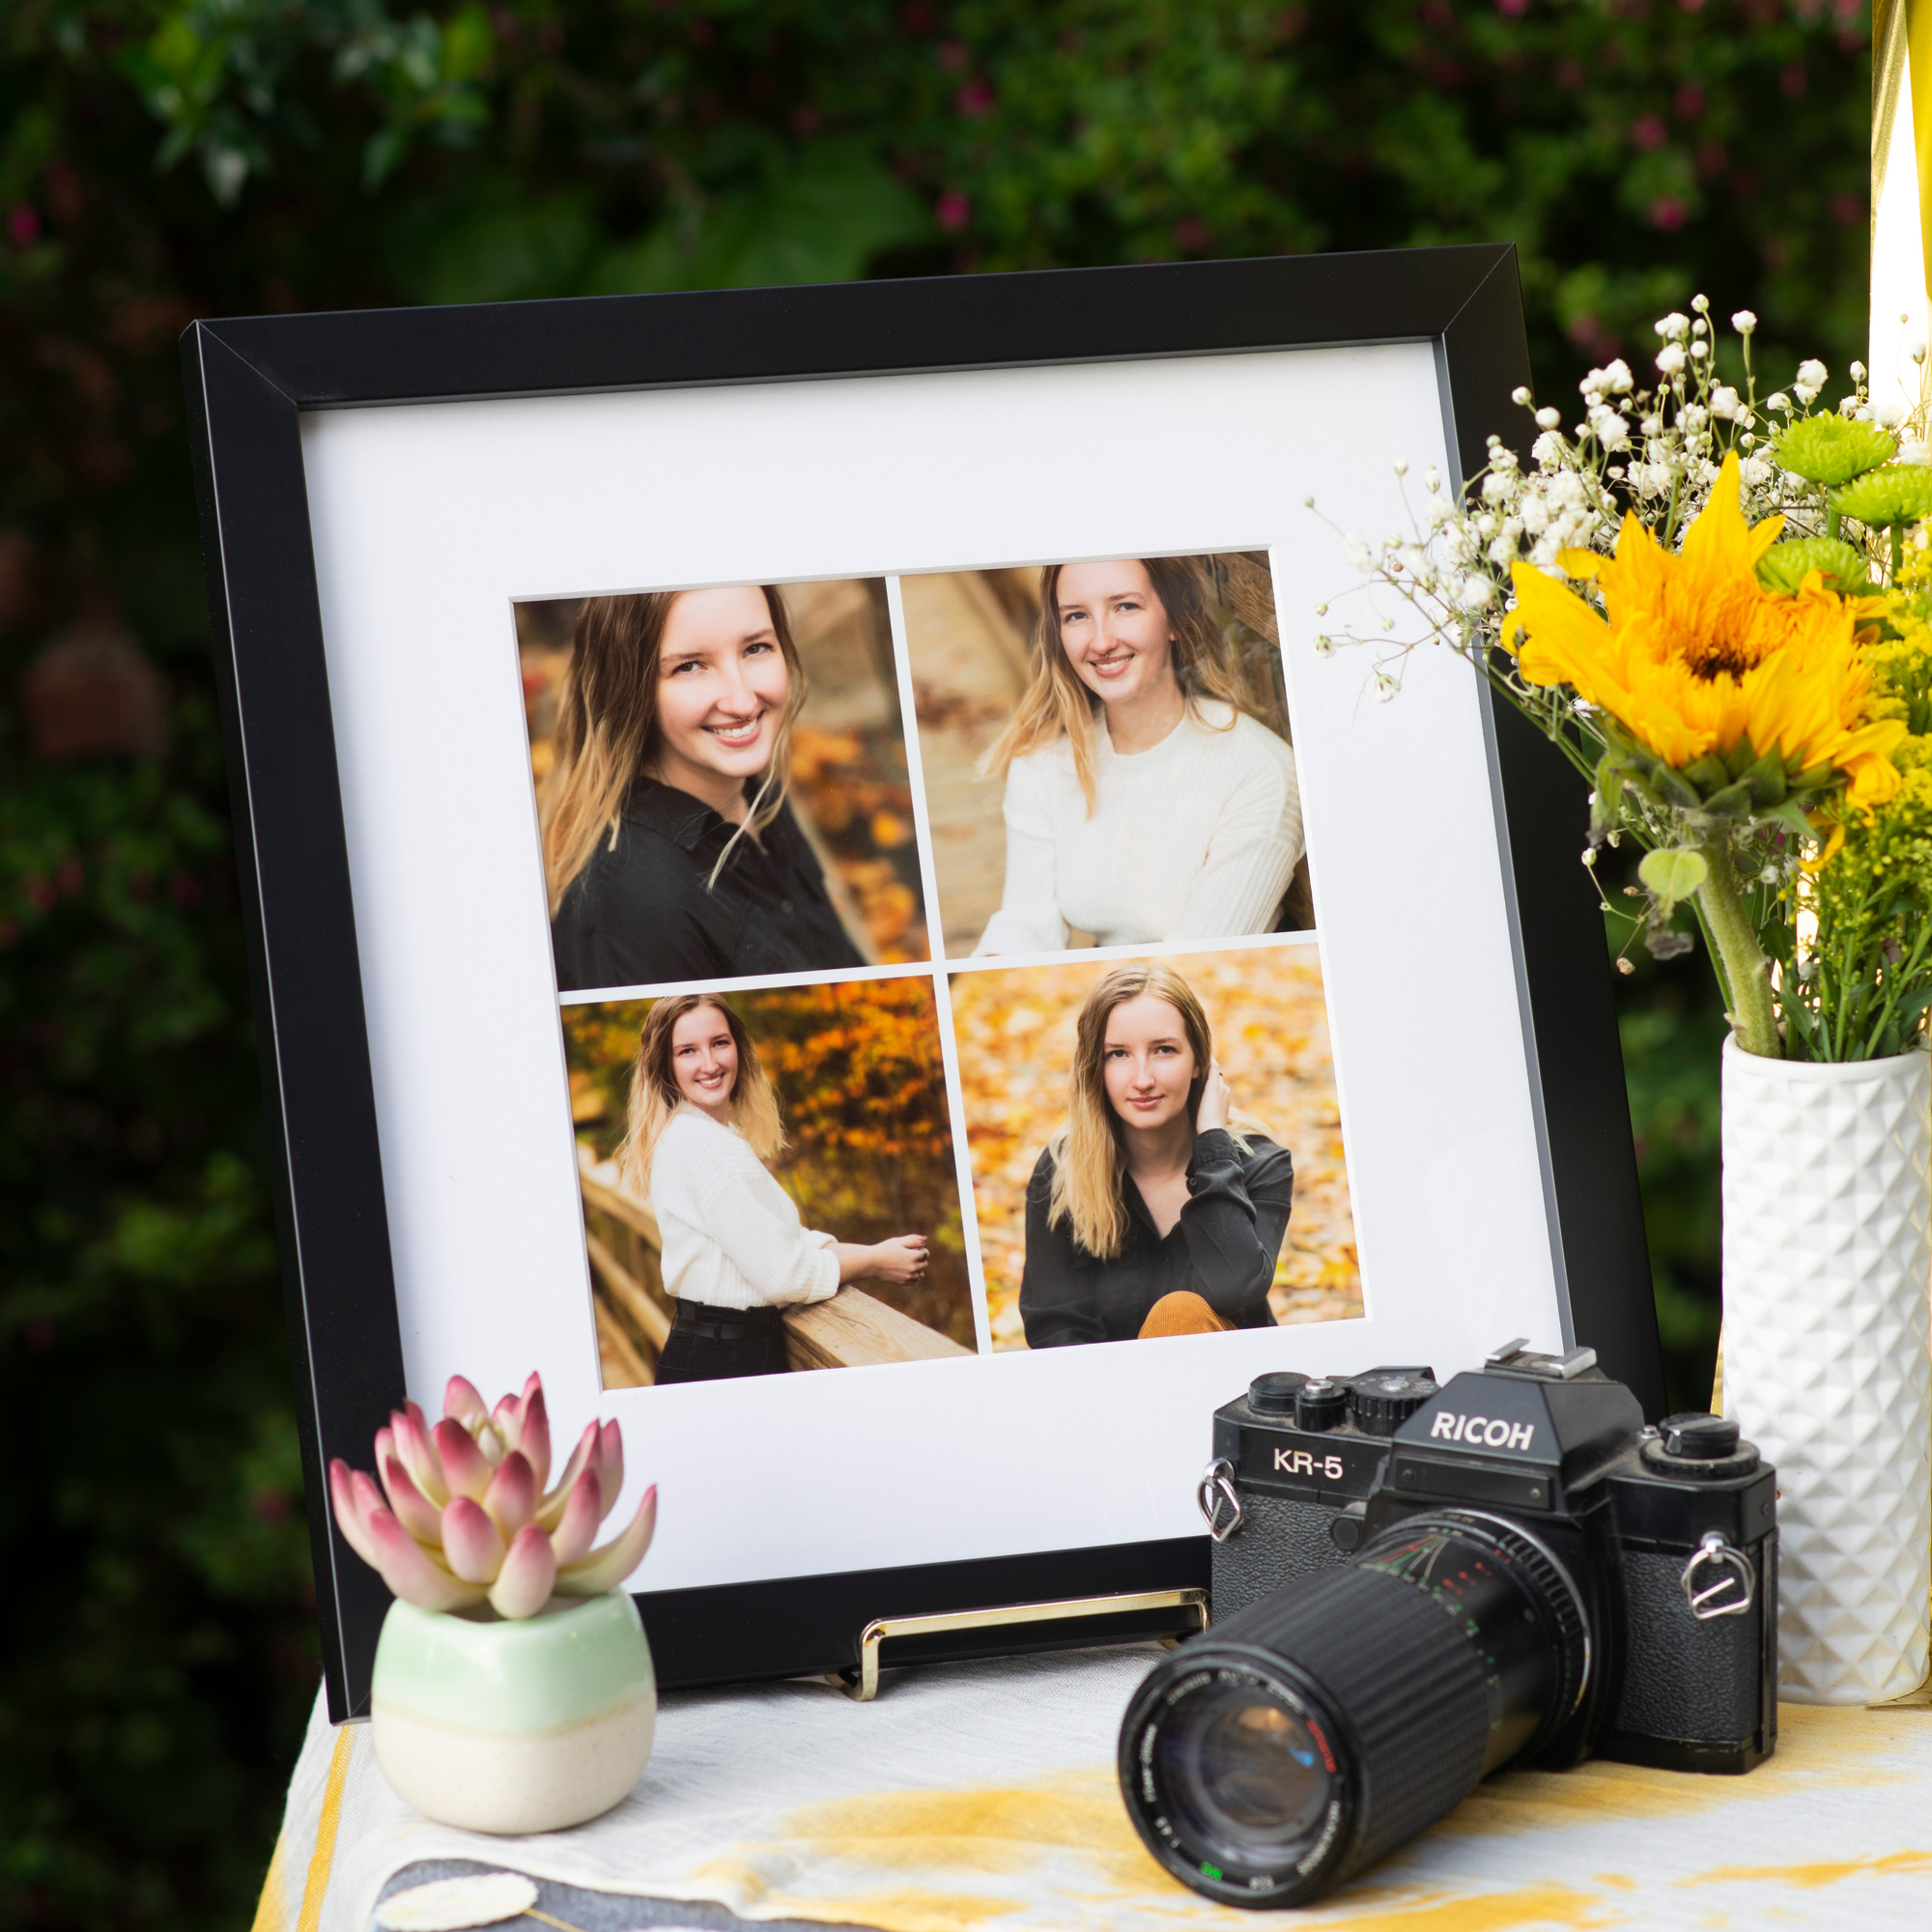 How To Make Your Own DIY Photobooth Frame - K & F Design